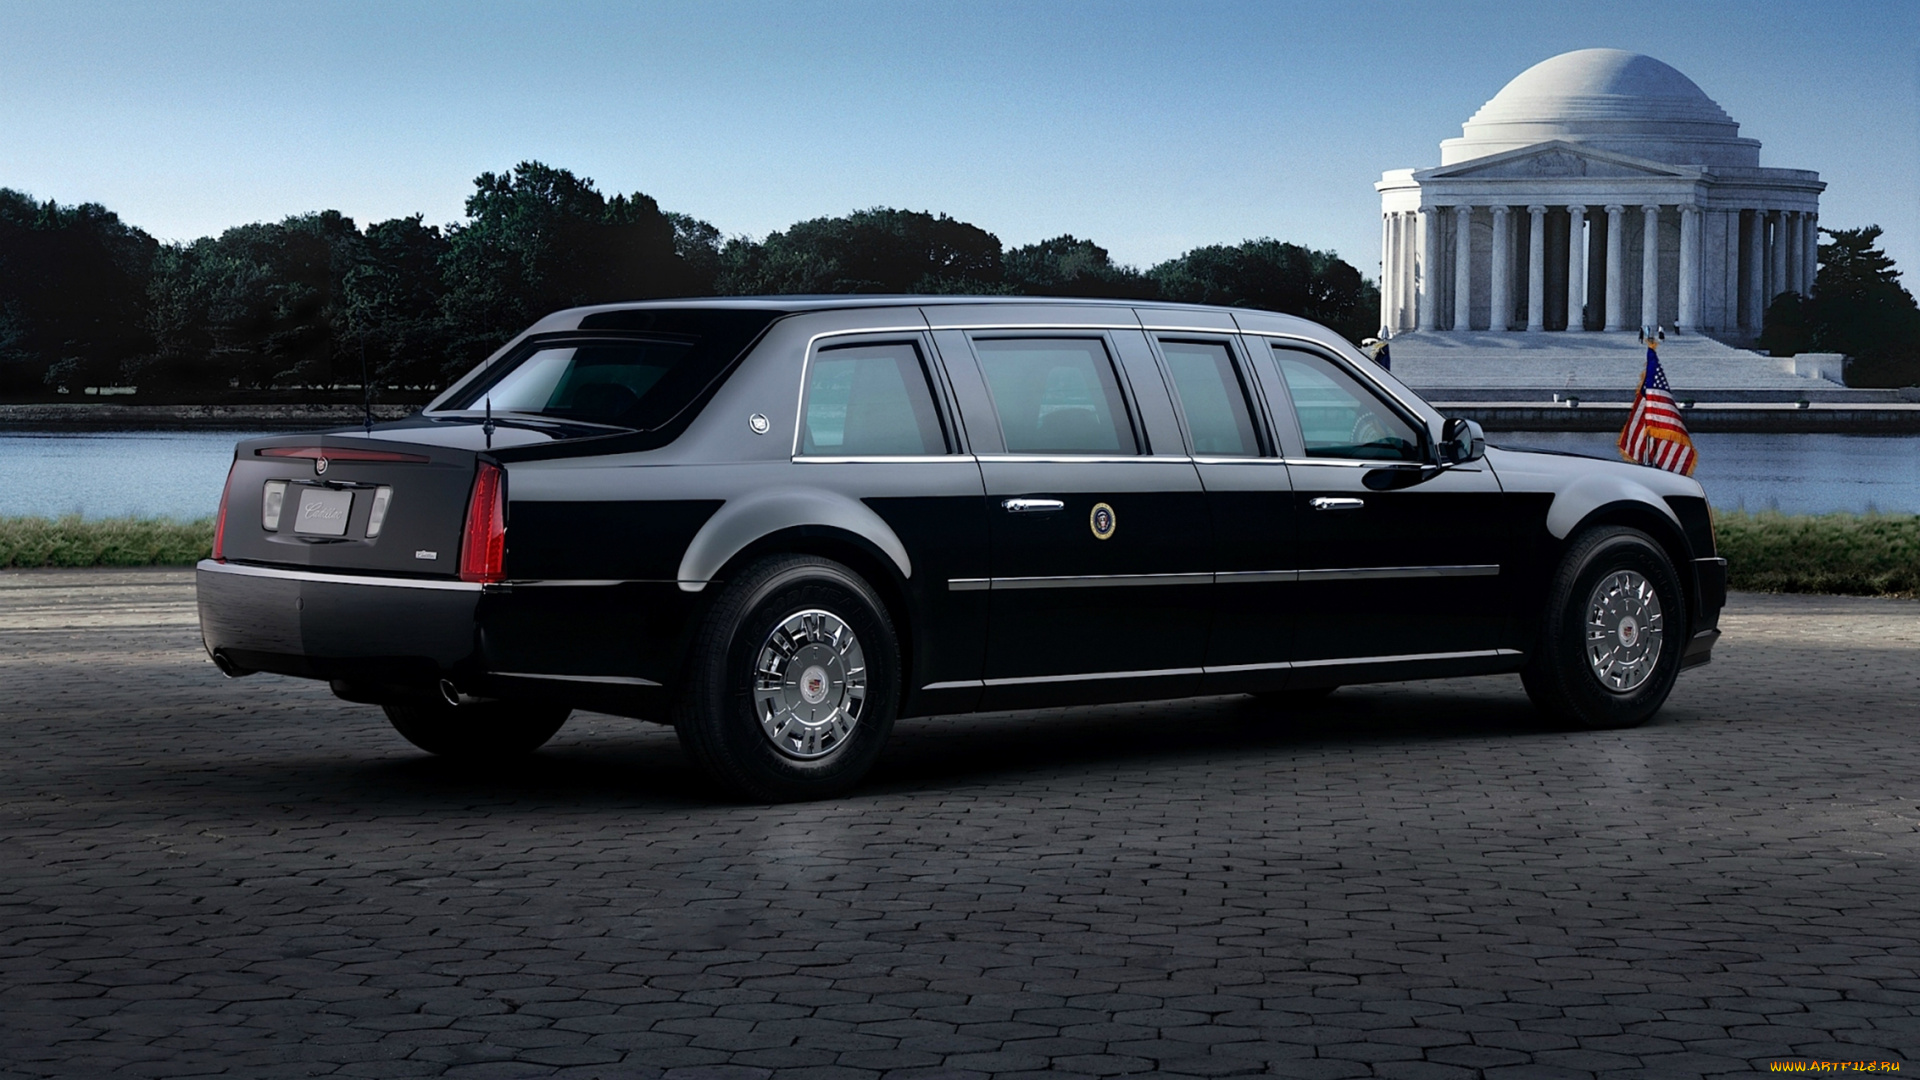 cadillac, one, barack, obama`s, new, presidential, limousine, 2009, автомобили, cadillac, barack, one, 2009, limousine, presidential, new, obama